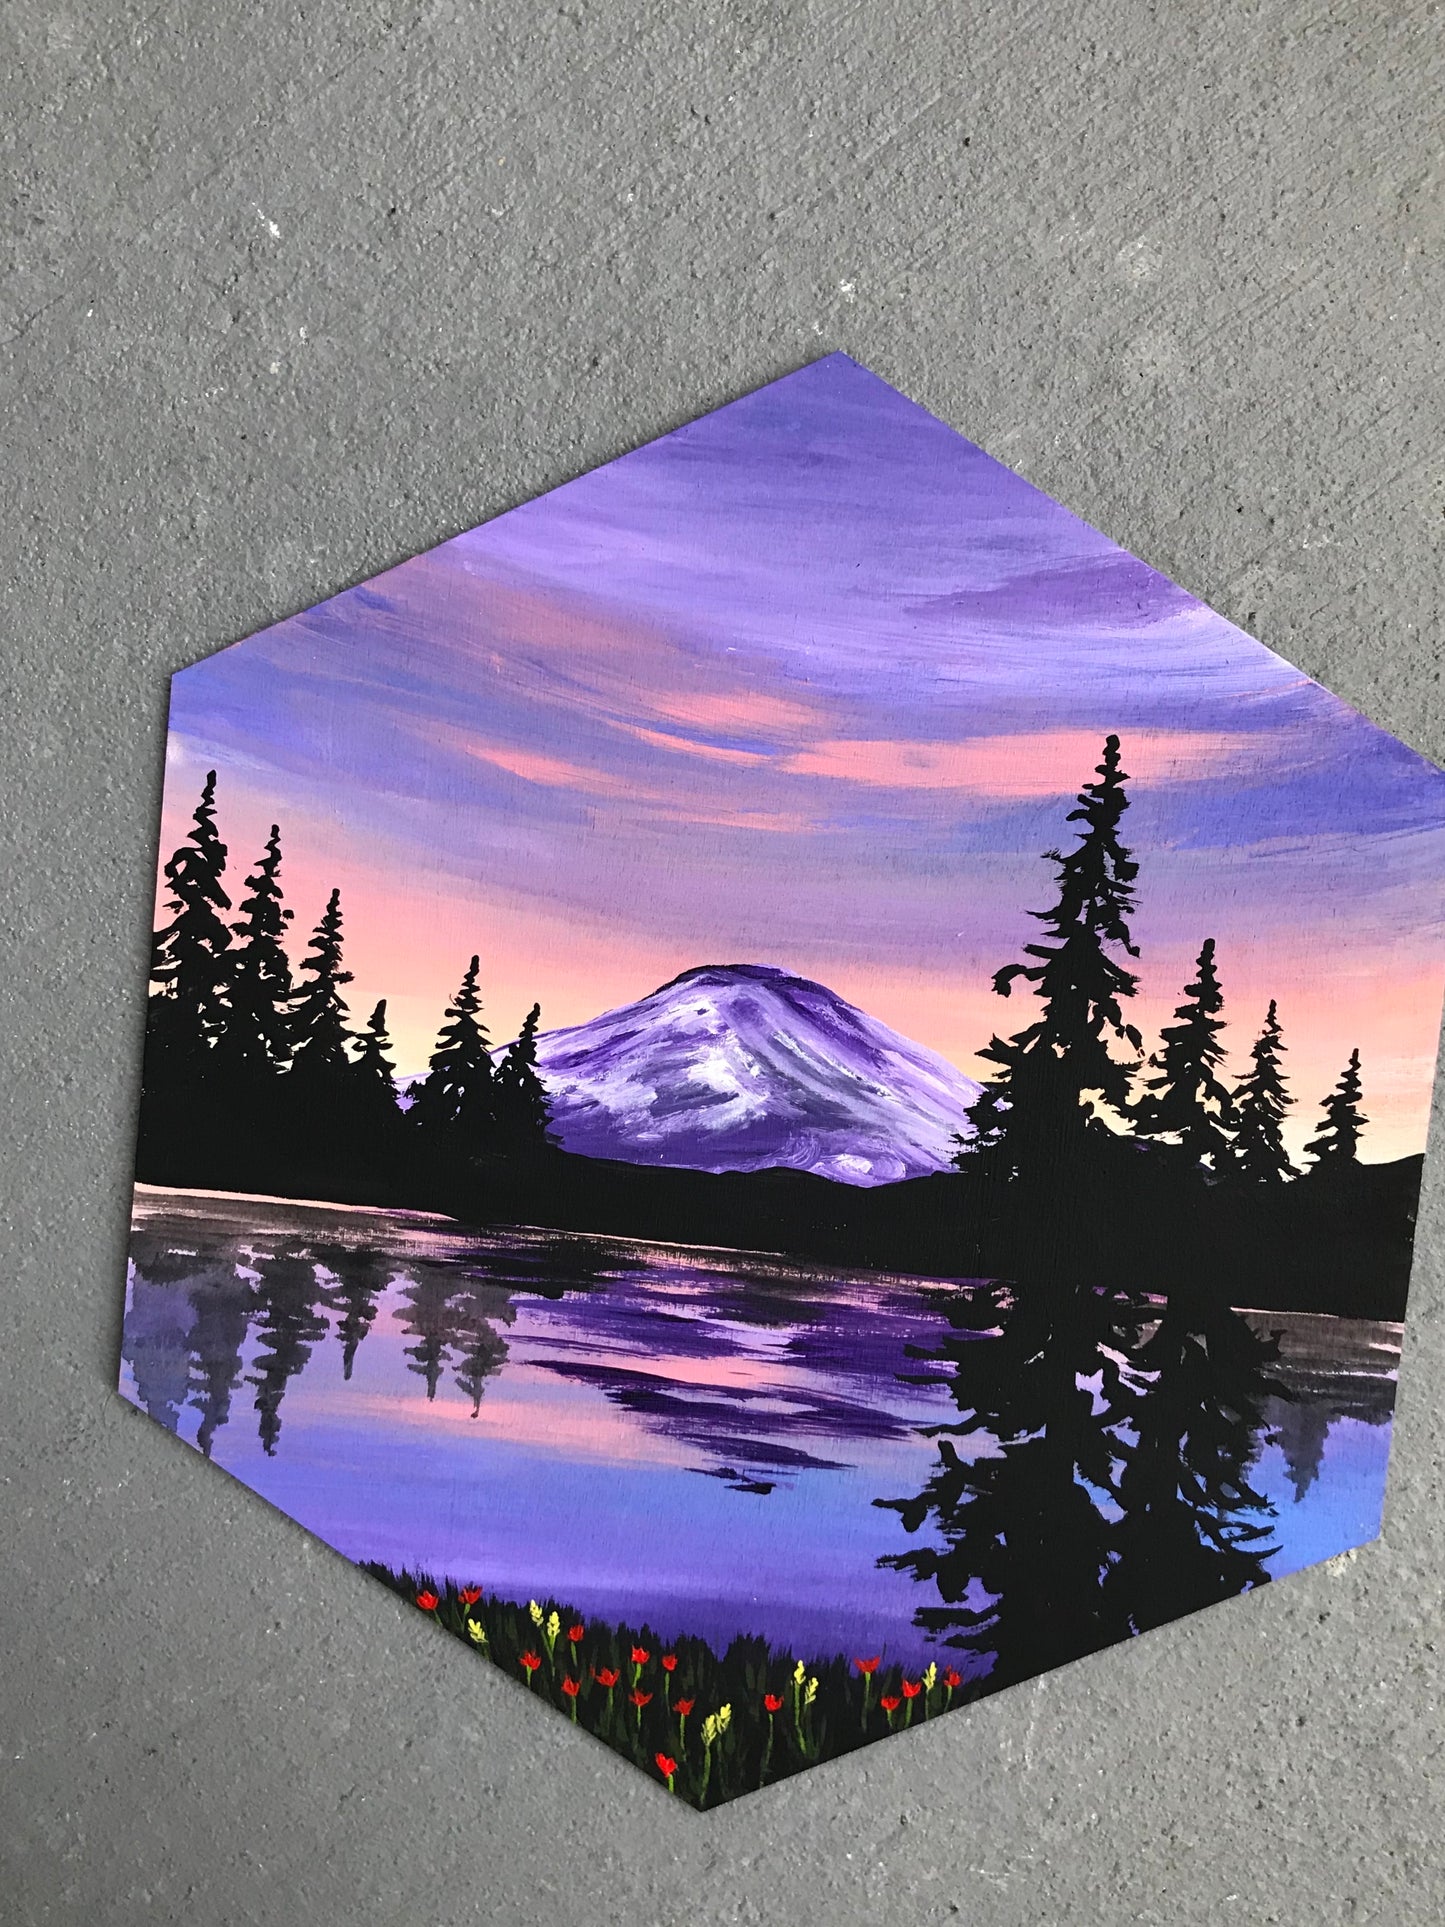 Purple mountain hexagon wood cutout painting